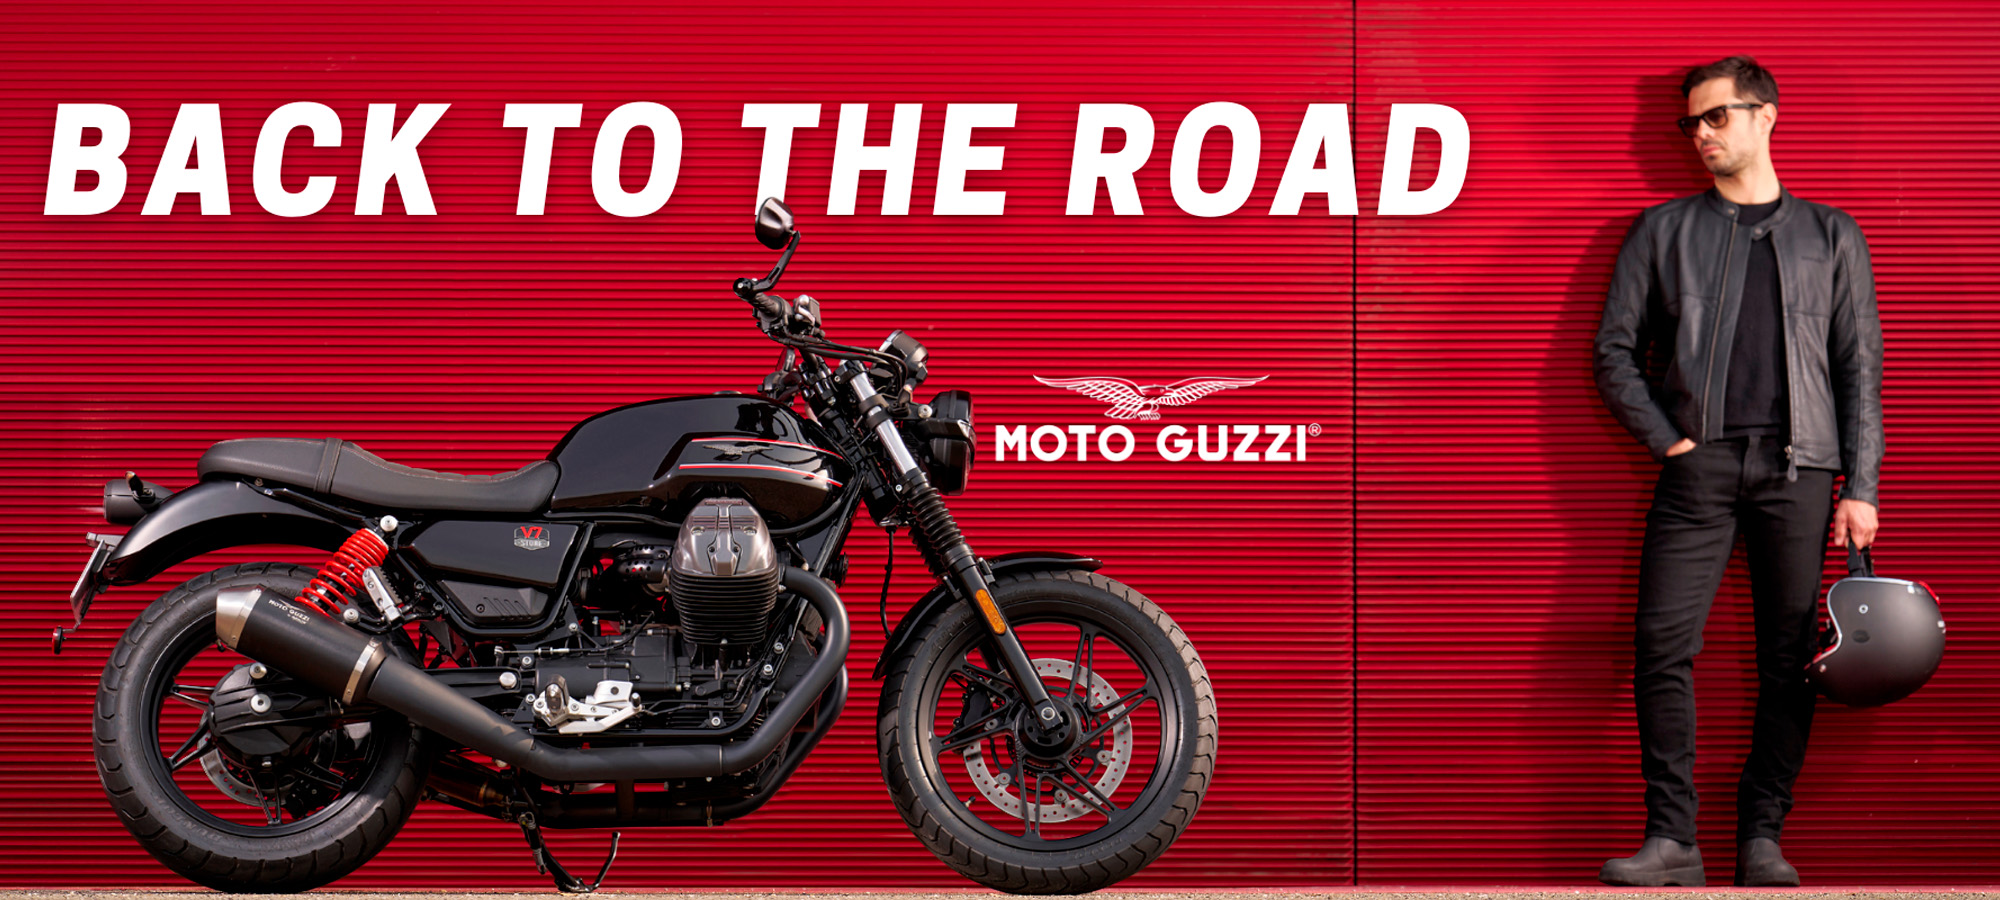 Moto Guzzi US - Back to the road at Sloans Motorcycle ATV, Murfreesboro, TN, 37129